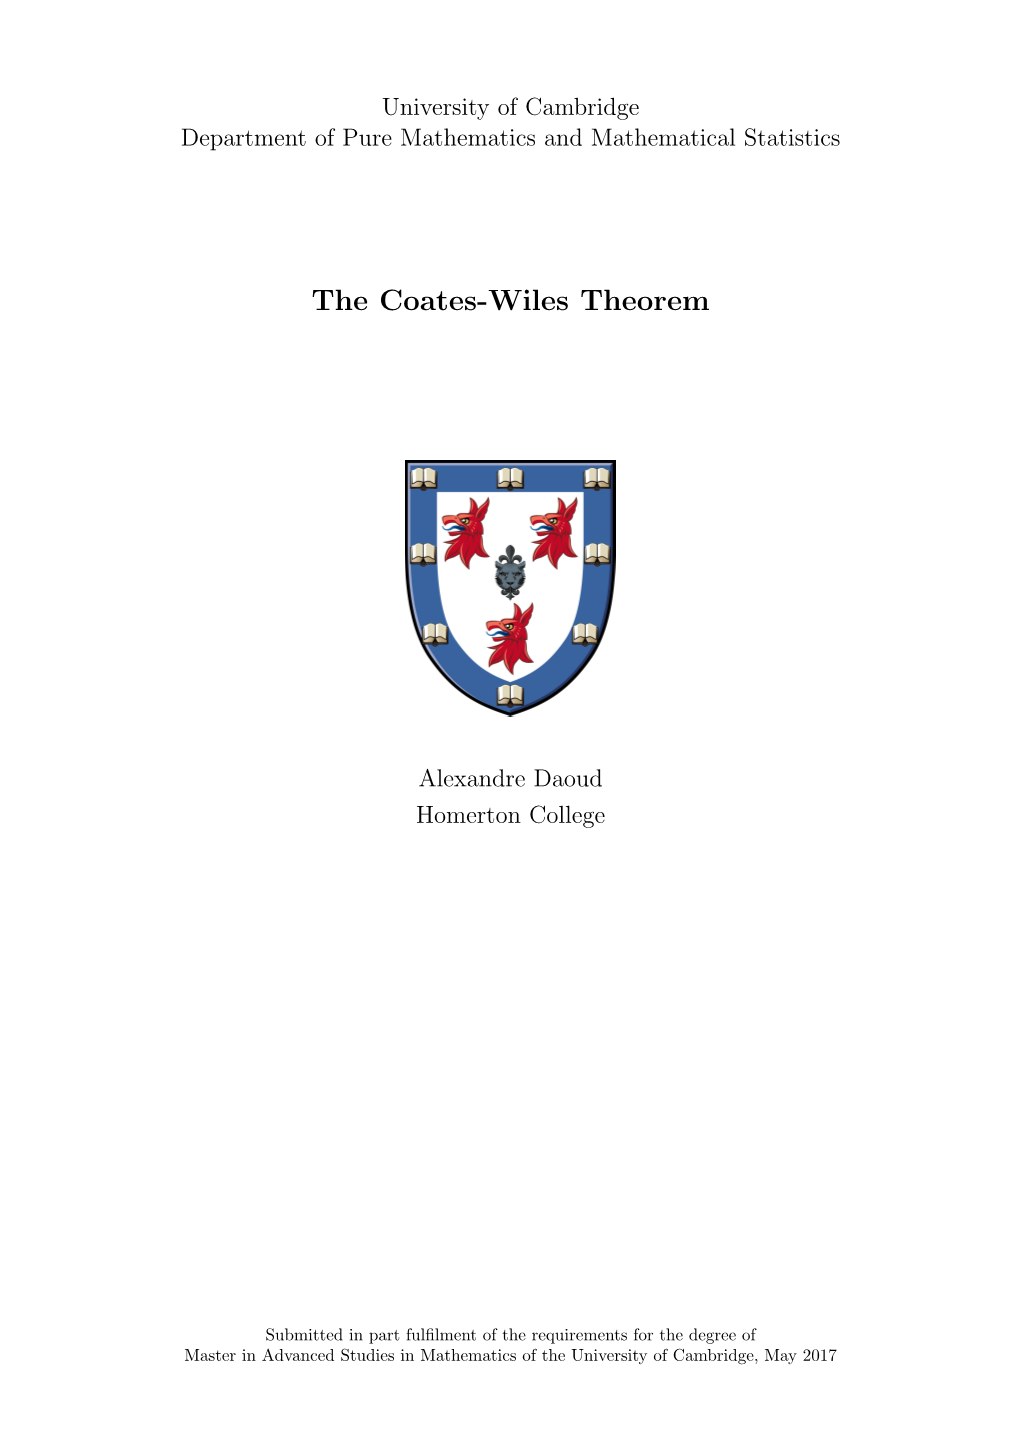 The Coates-Wiles Theorem